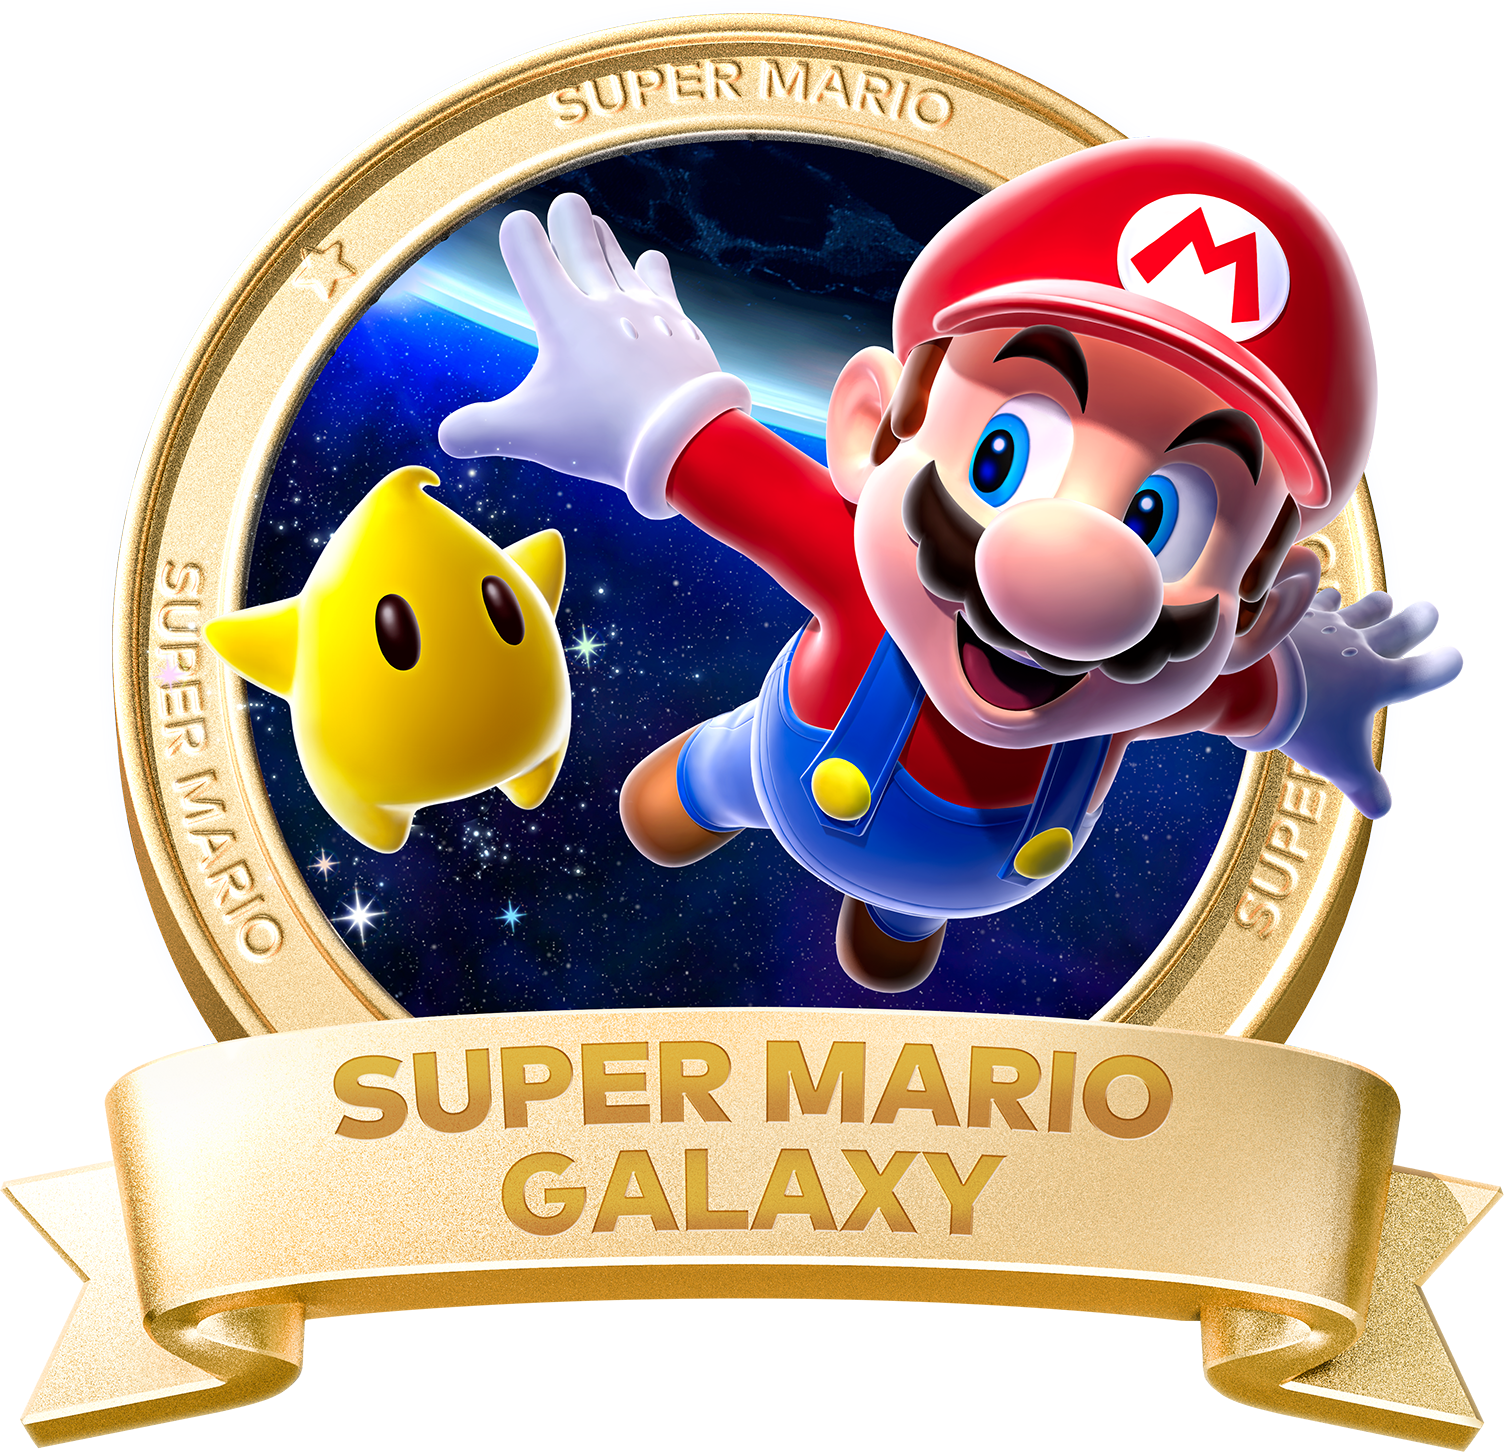 Super mario 3d stars. Игра Nintendo super Mario 3d all-Stars. Супер Марио галакси. Супер Марио Галактика 3. Super Mario Galaxy логотип.